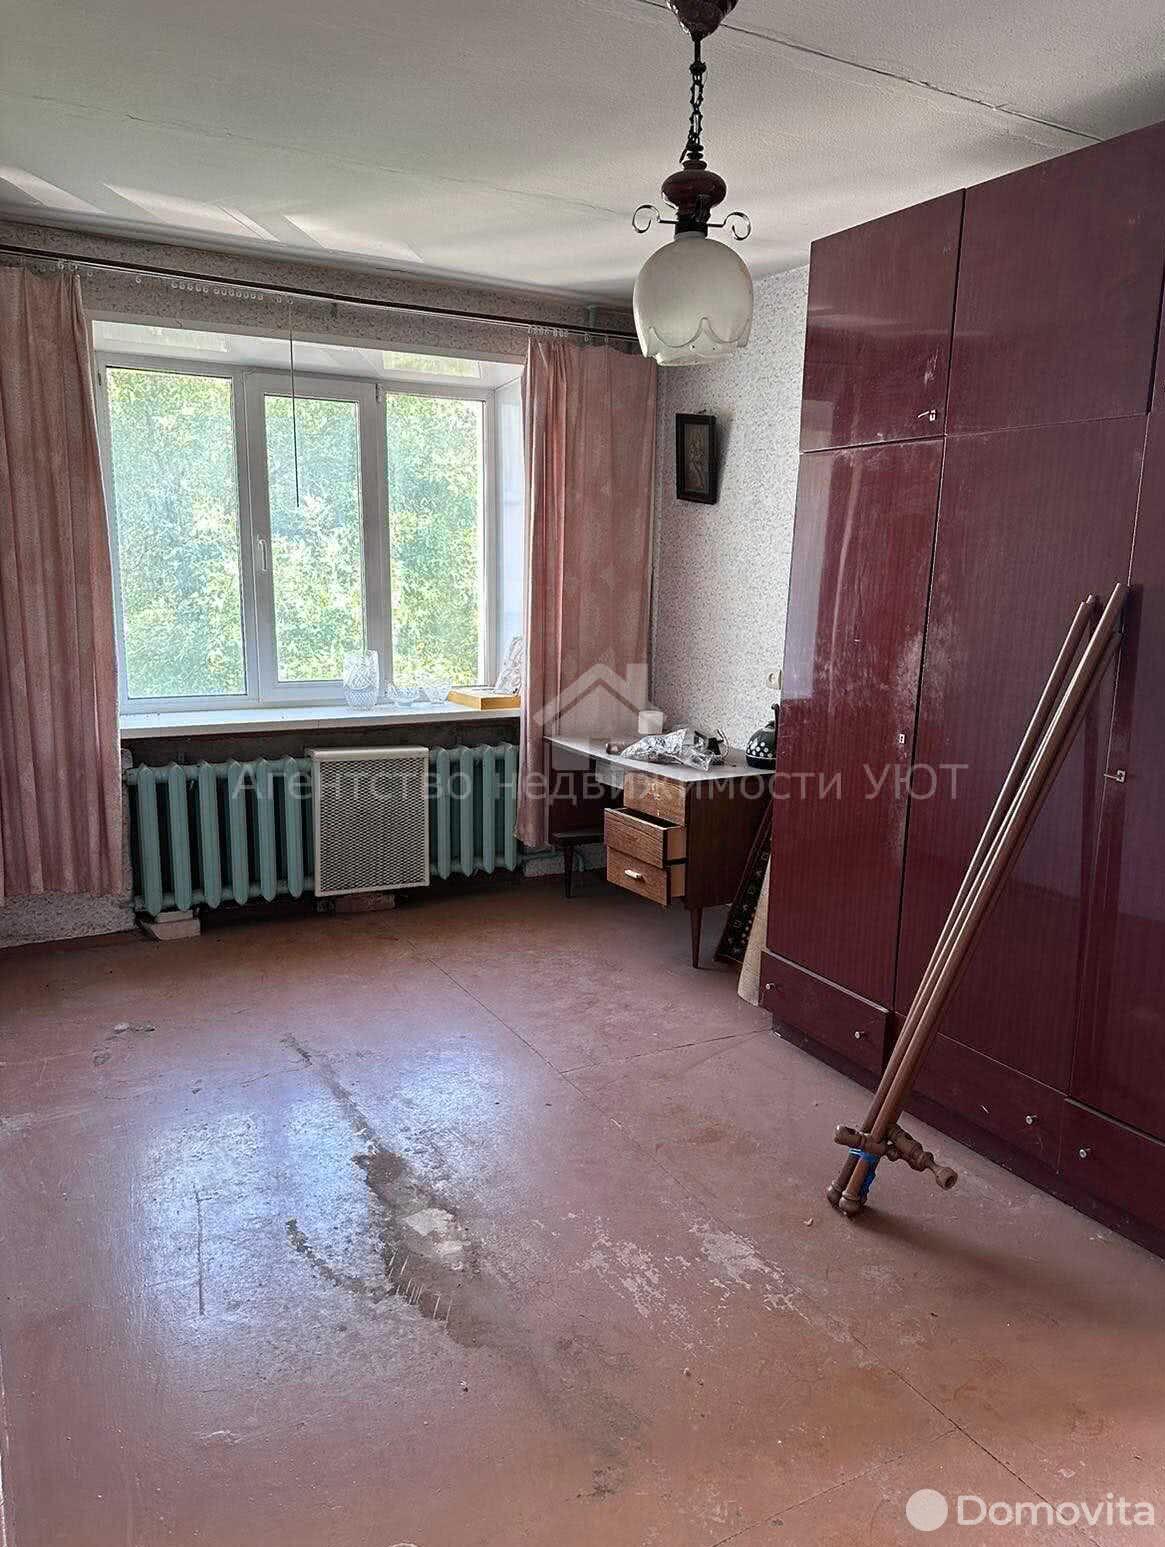 квартира, Витебск, ул. Ленина, стоимость продажи 113 846 р.